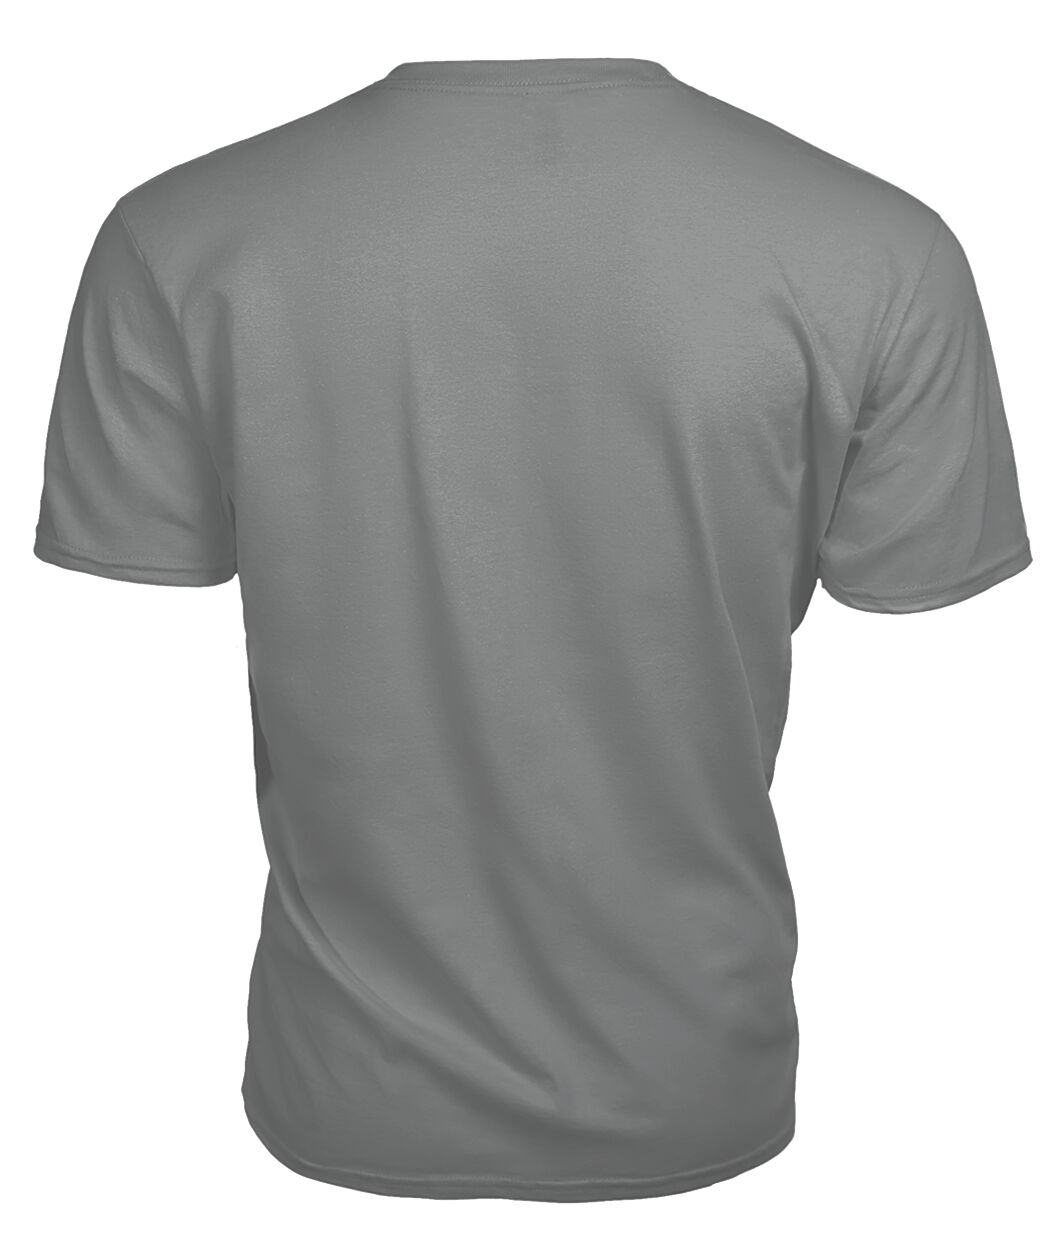 Livingstone Family Tartan - 2D T-shirt